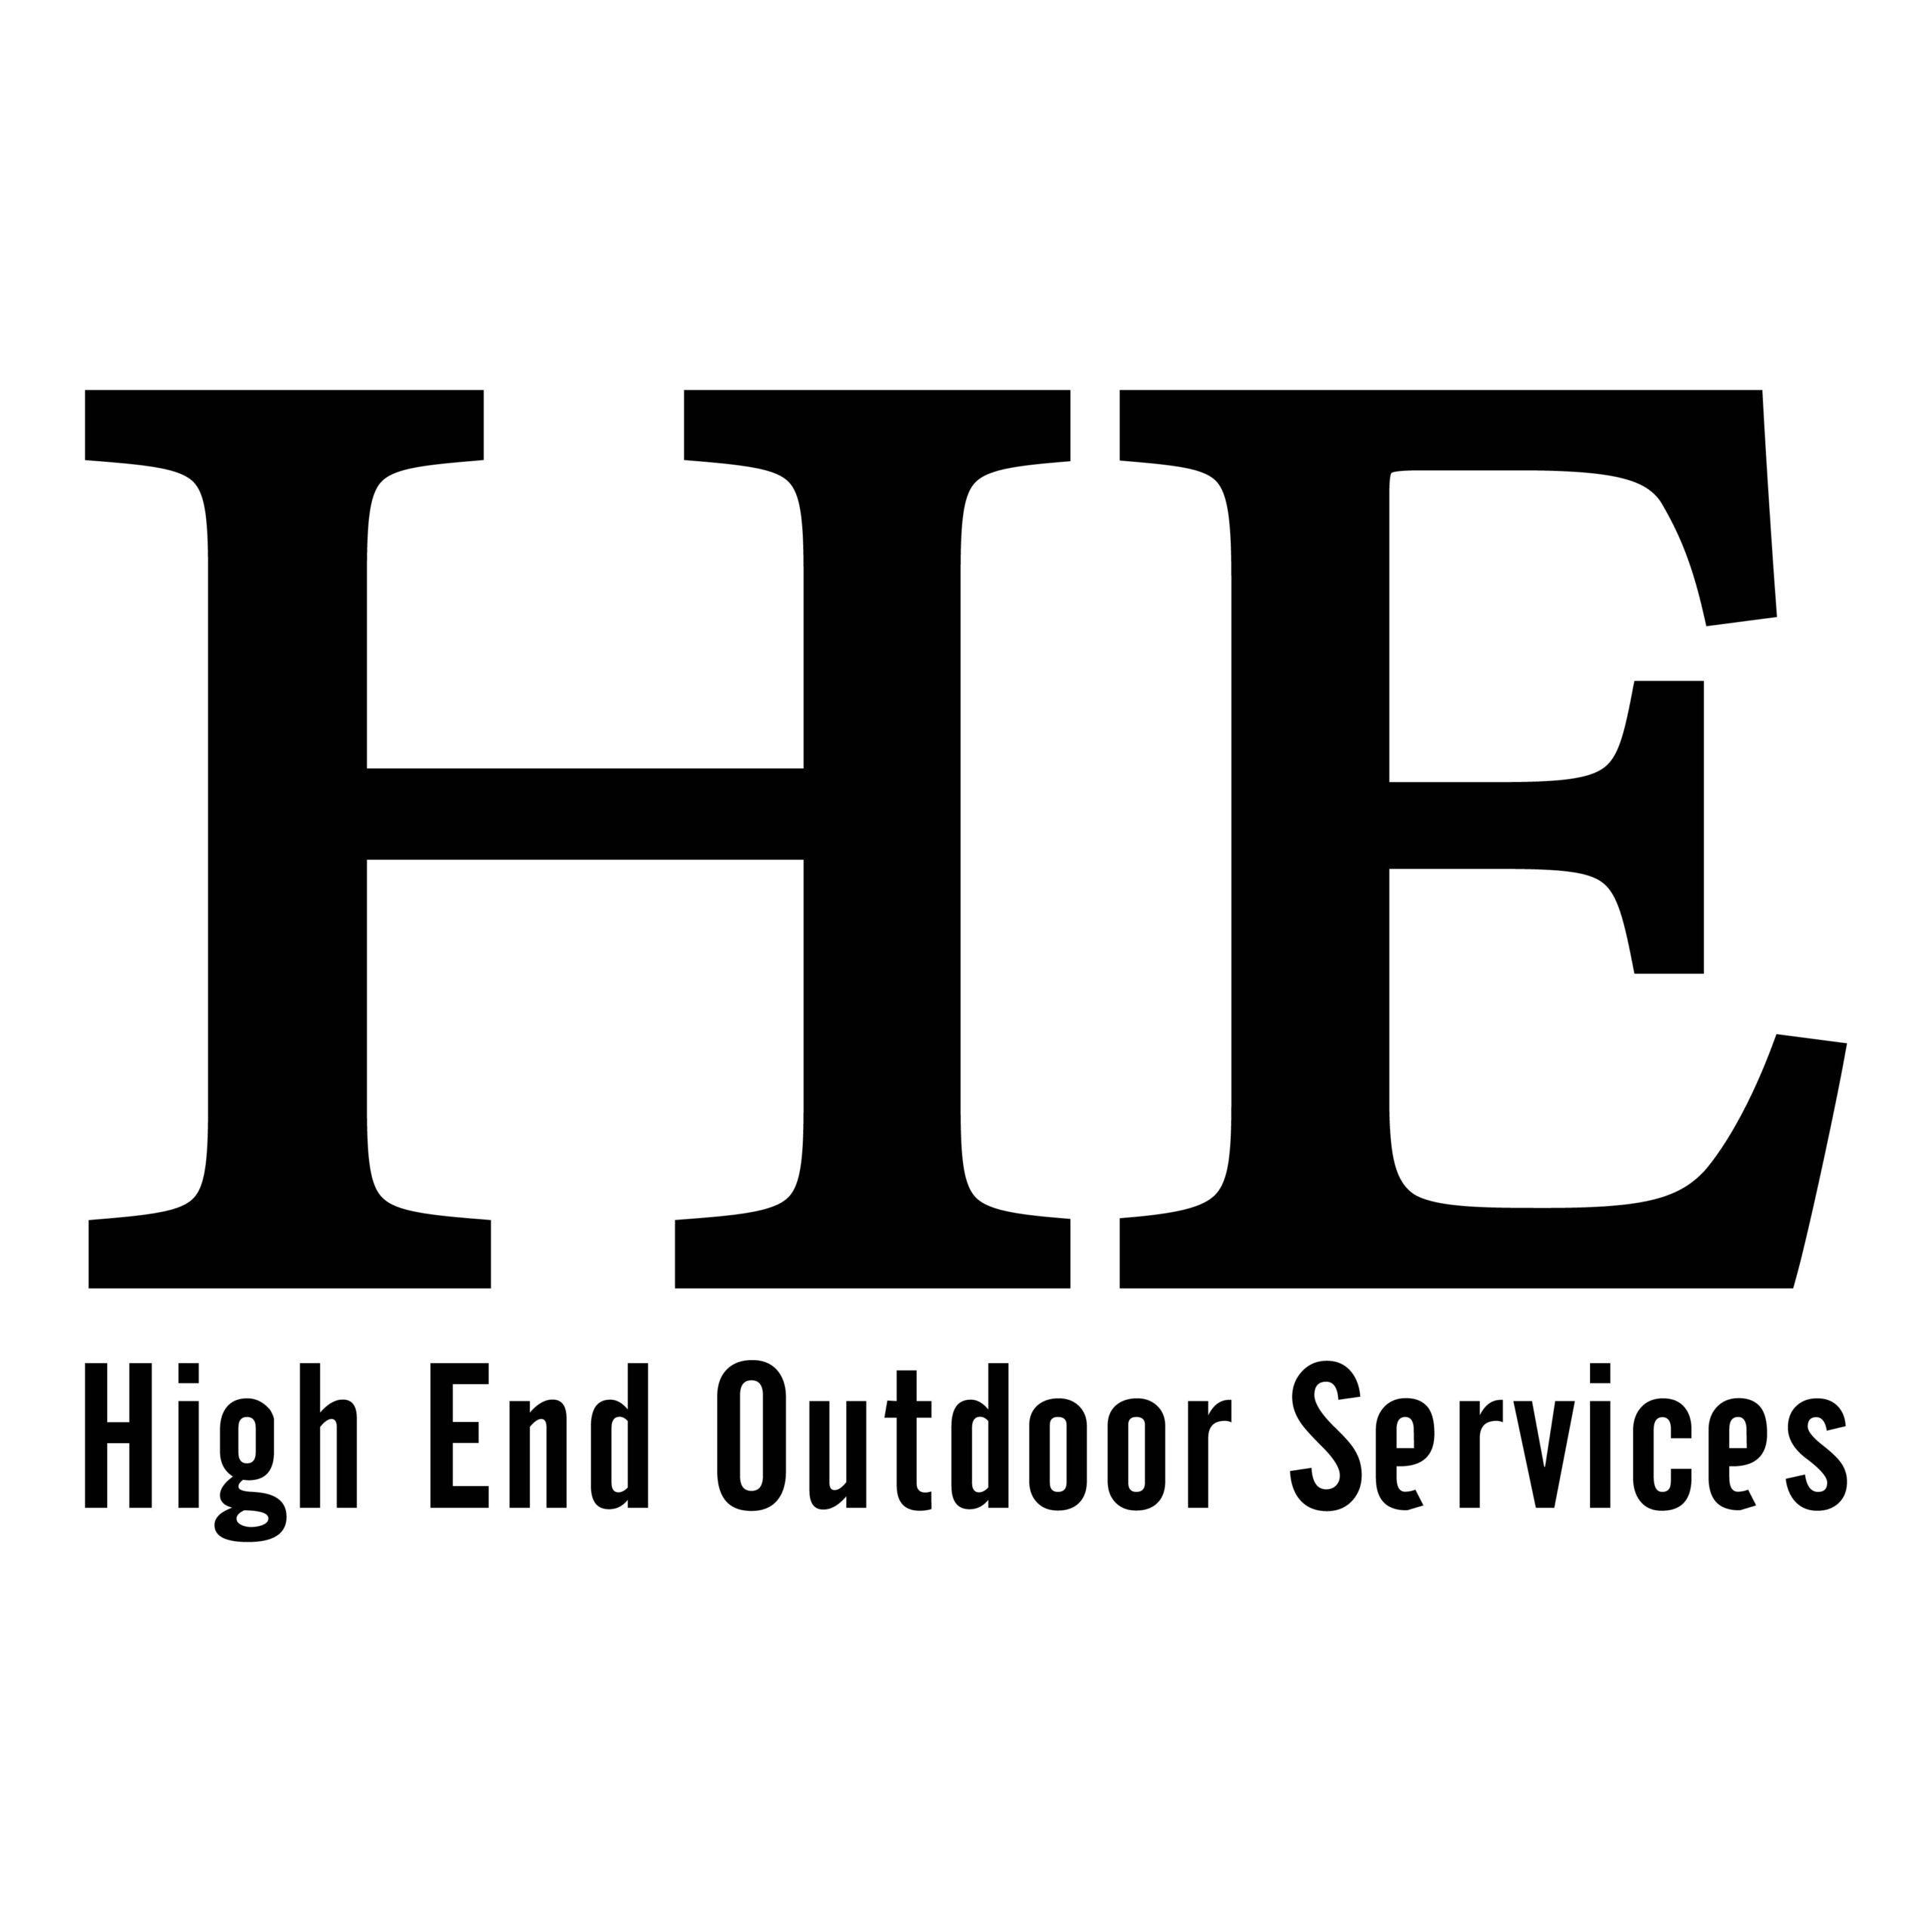 High End Outdoor Services